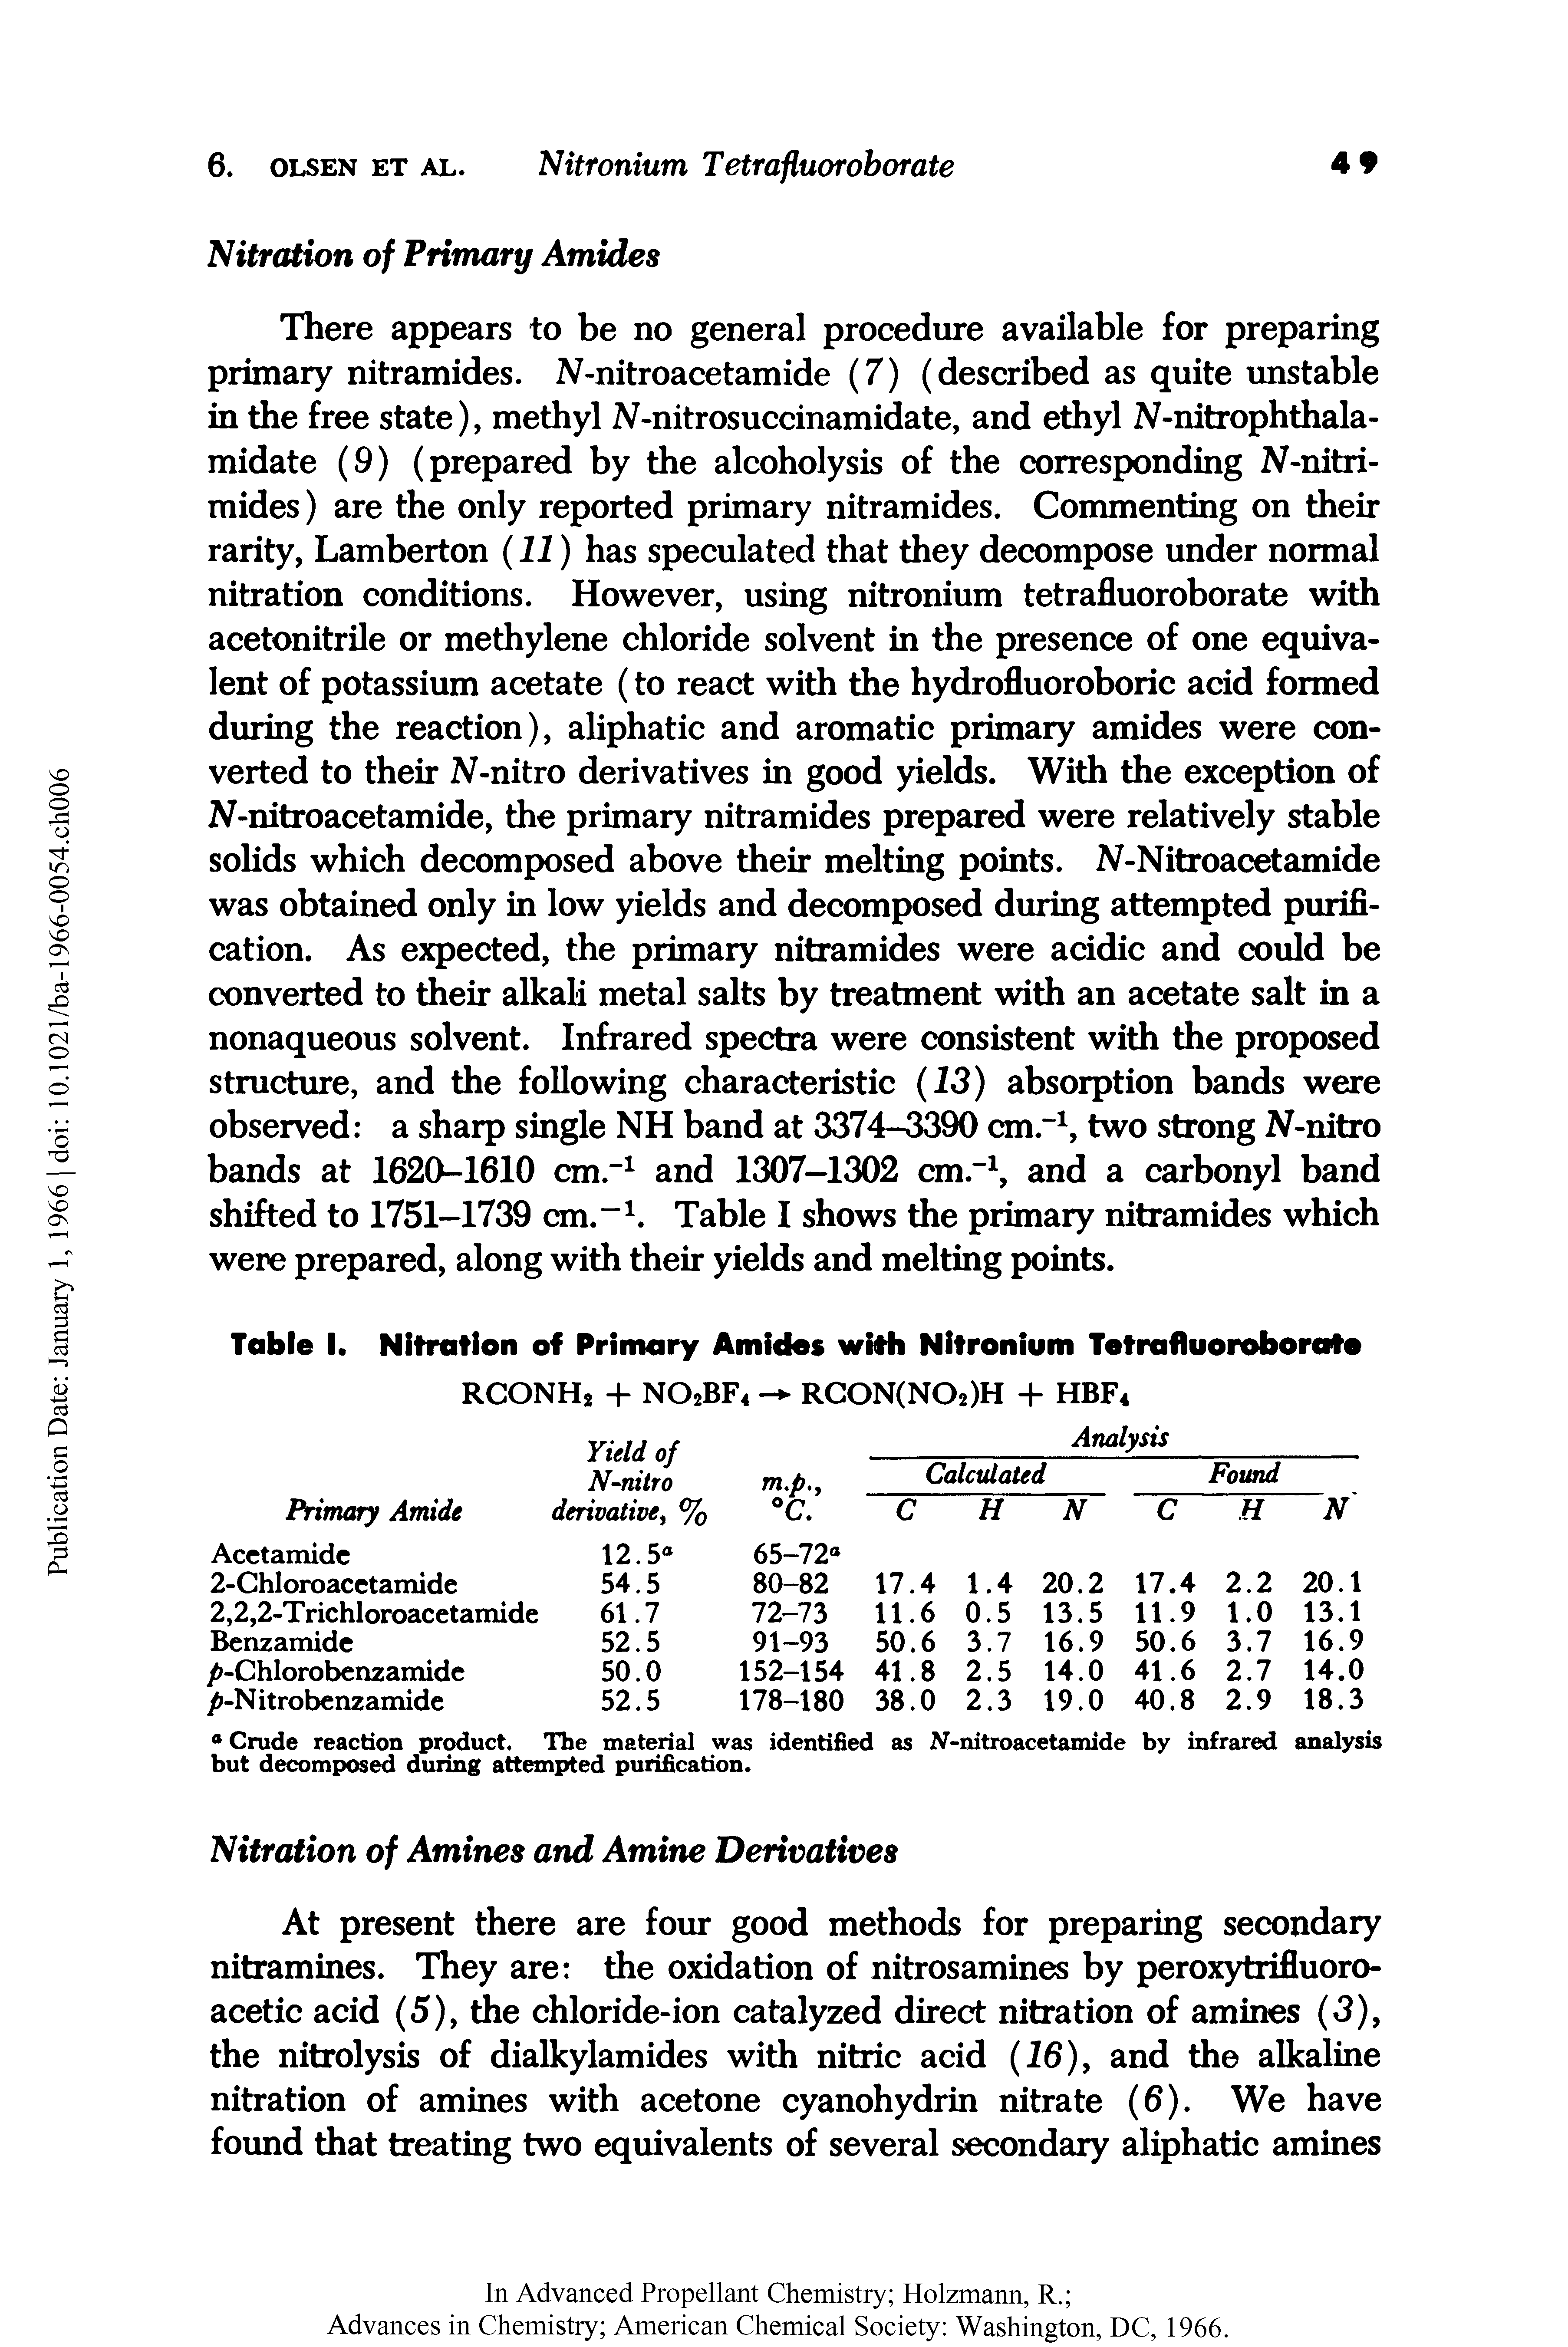 Table I. Nitration of Primary Amides with Nitronium Tetrafluoroborate...